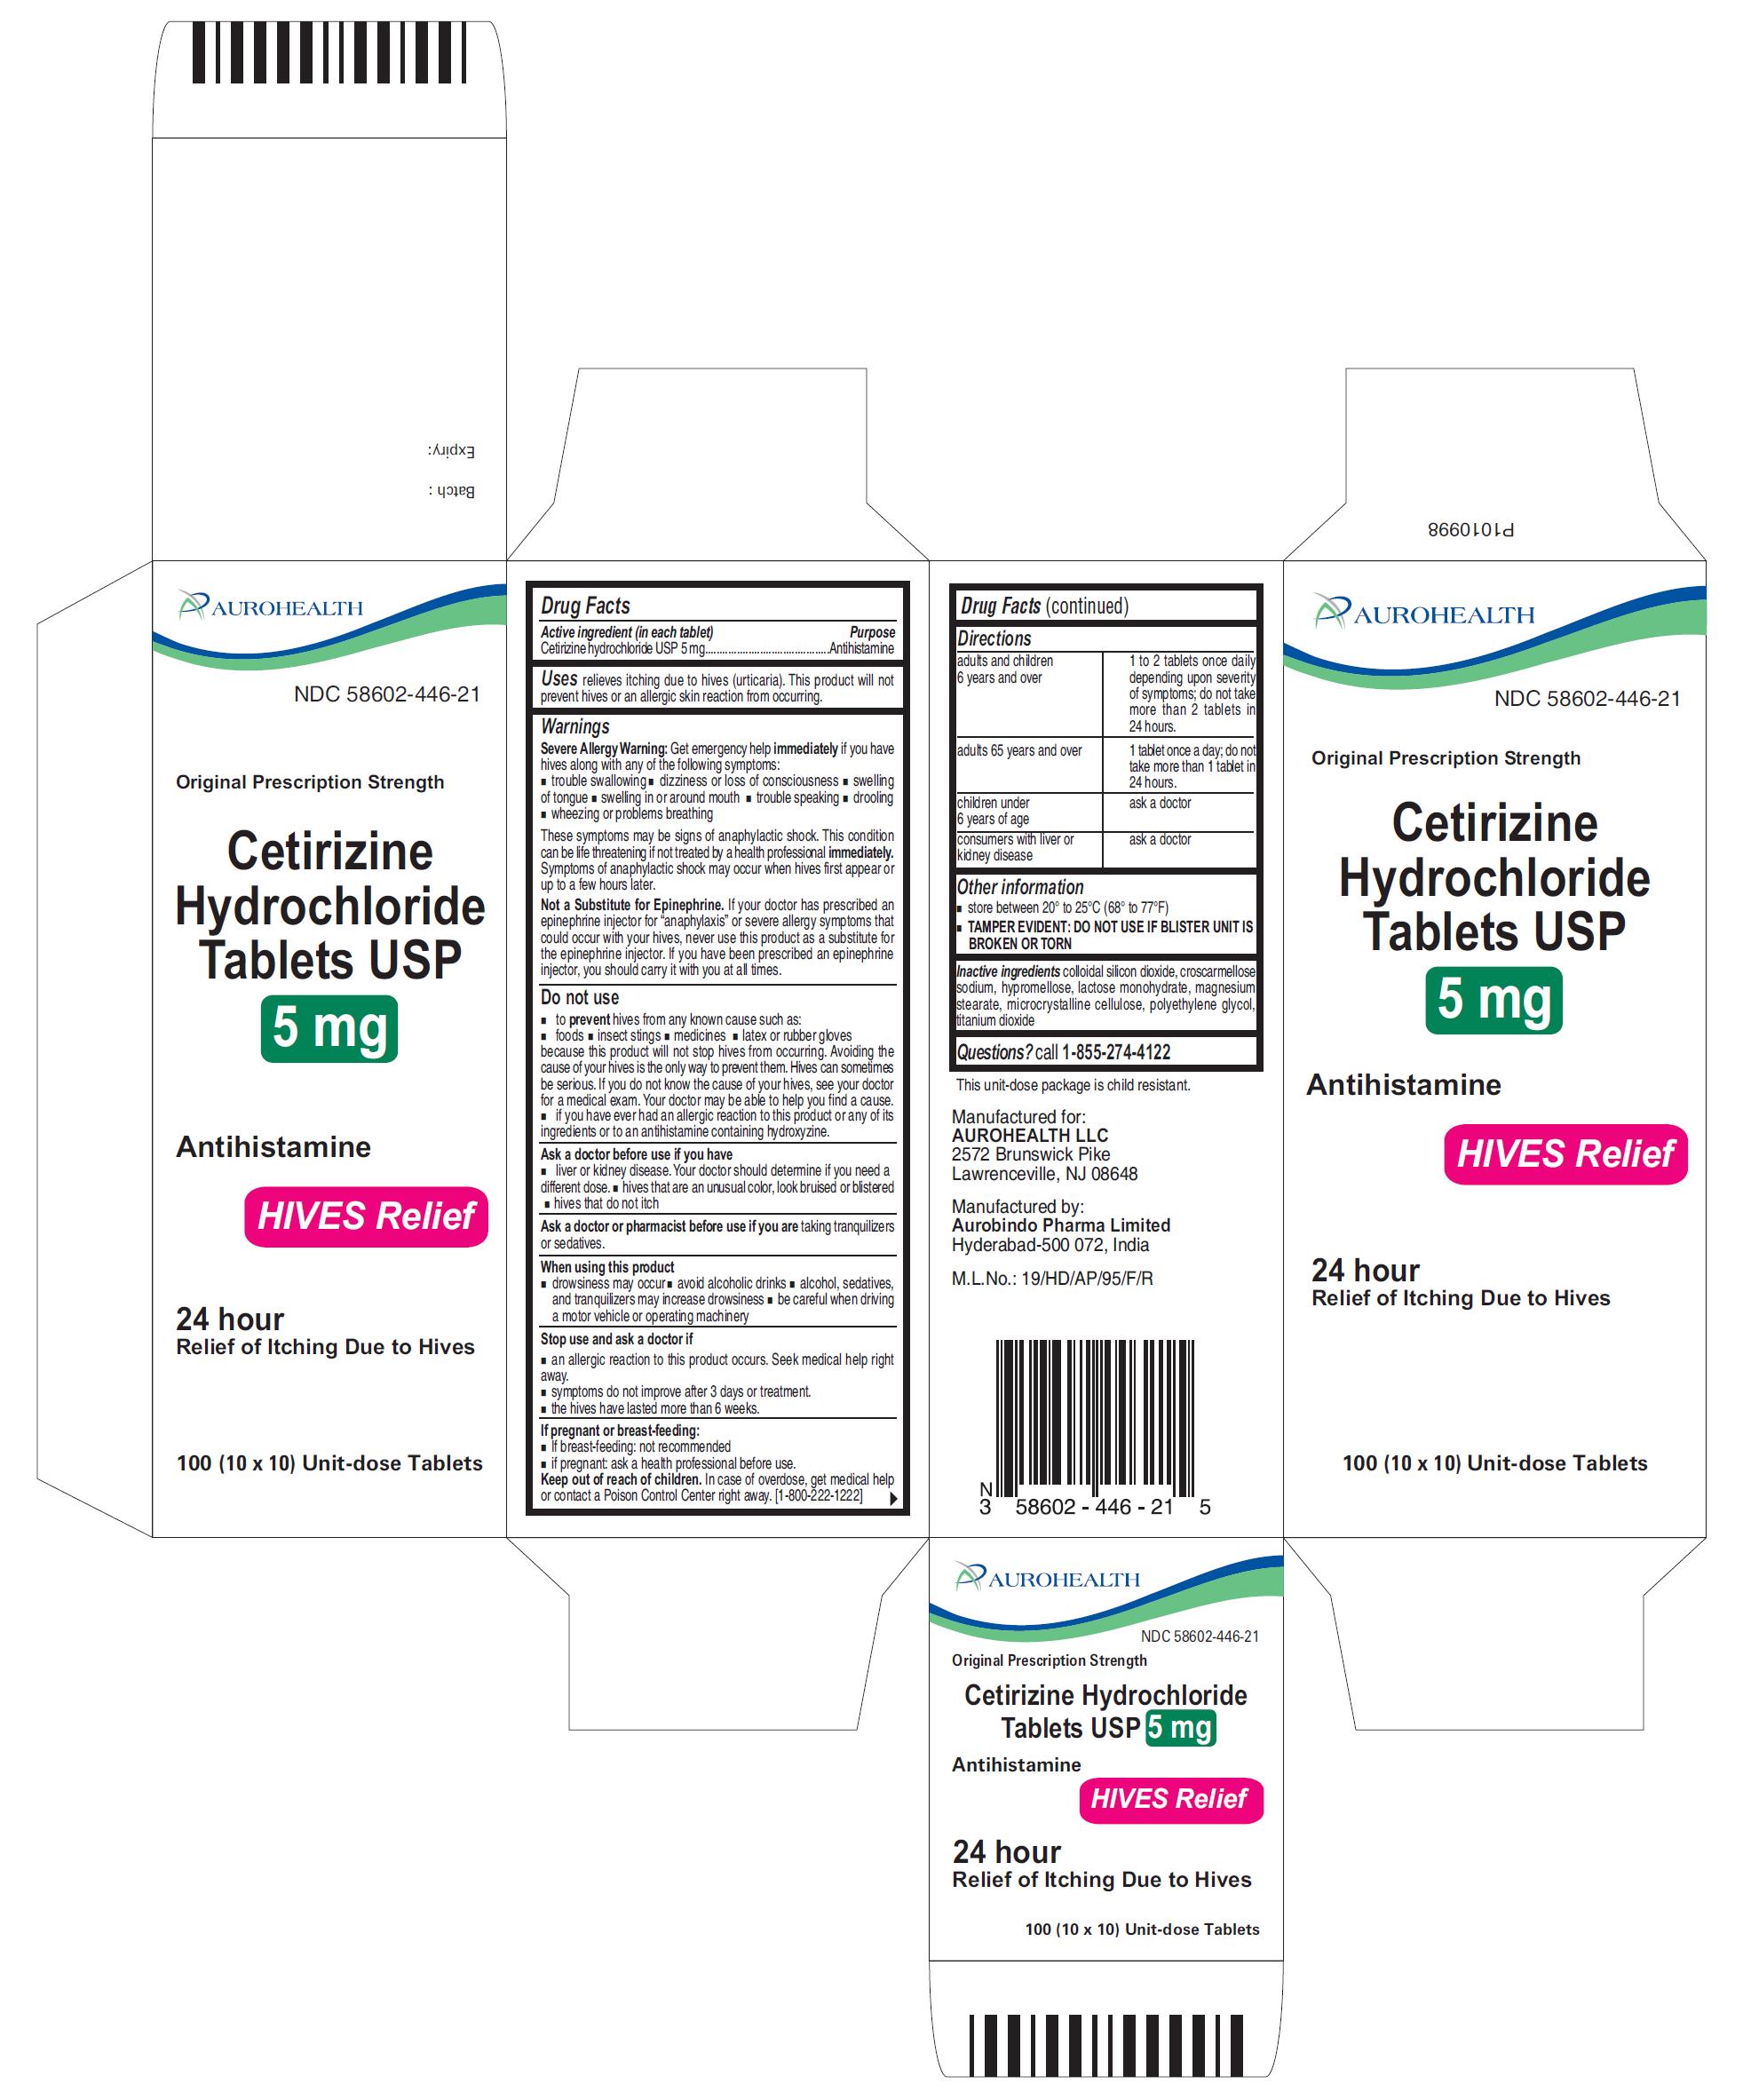 PACKAGE LABEL-PRINCIPAL DISPLAY PANEL - 5 mg (10 x 10 Blister Carton Label)